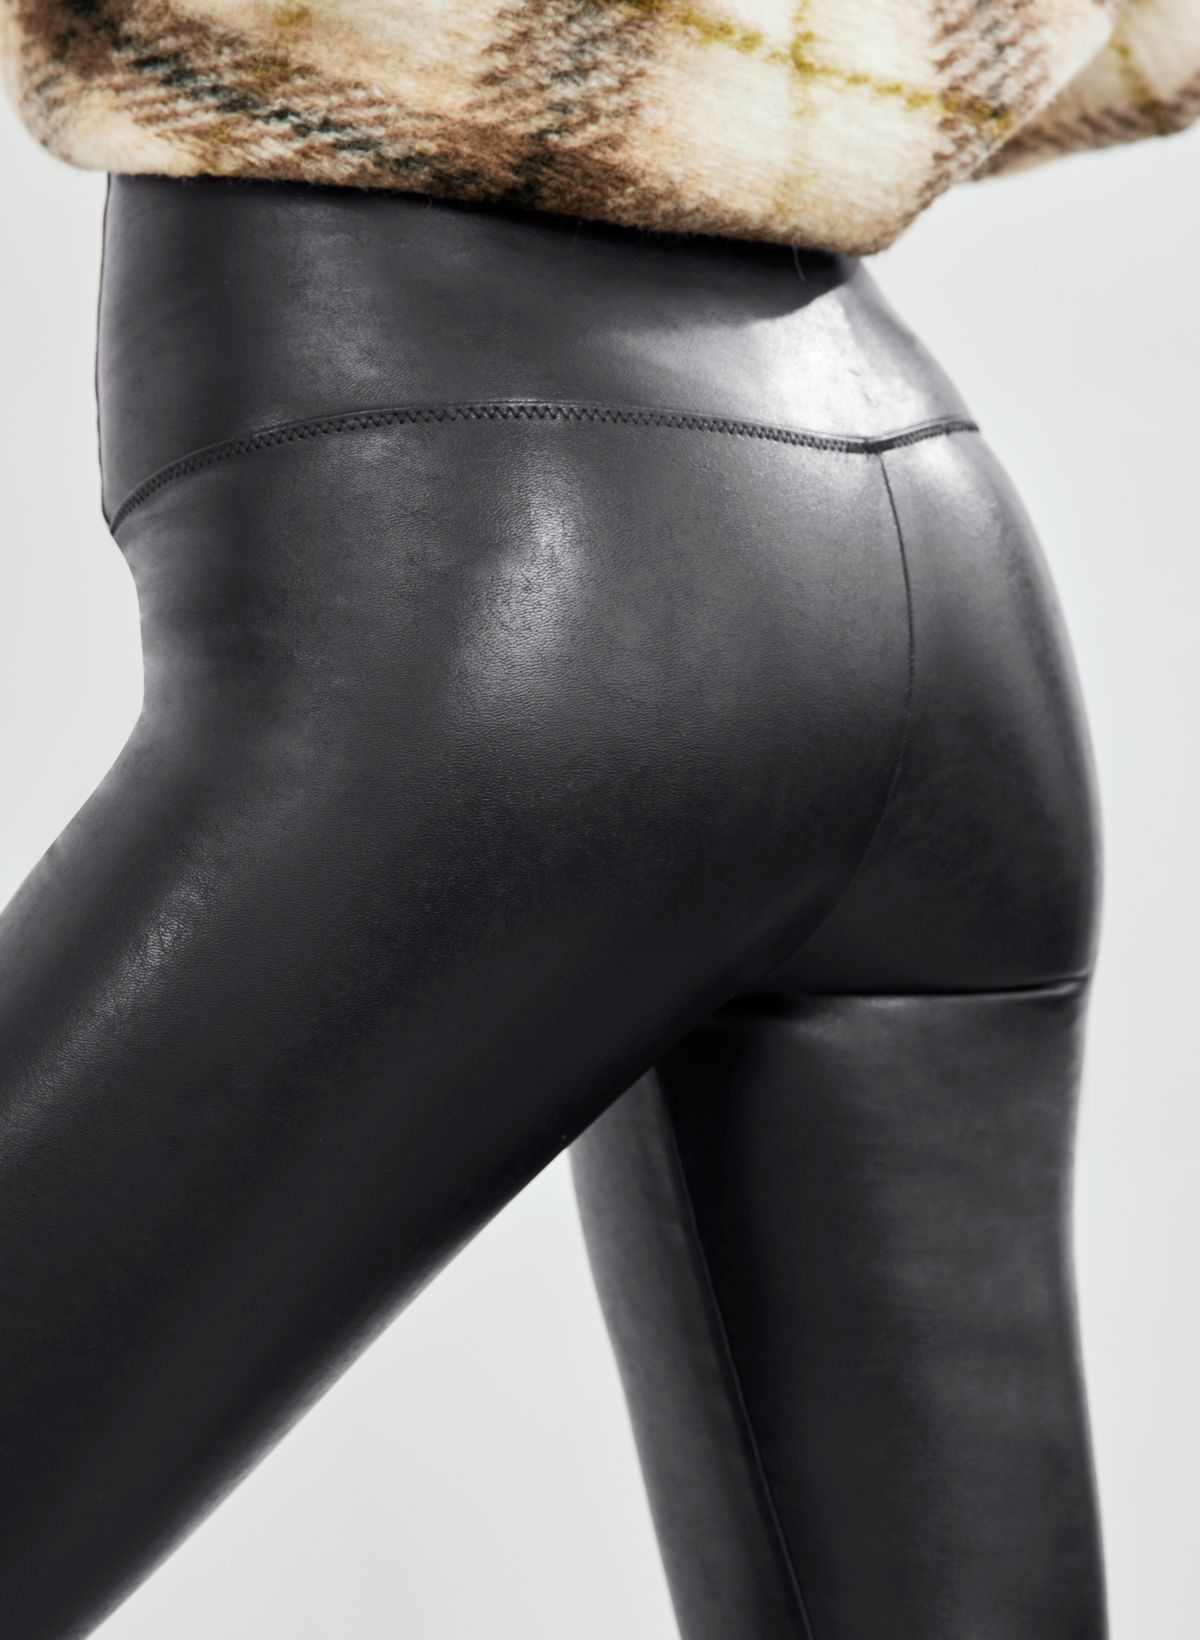 HUE BLACK FAUX LEATHER LEGGINGS PANTS  Black faux leather leggings, Vegan  leather leggings, Faux leather leggings